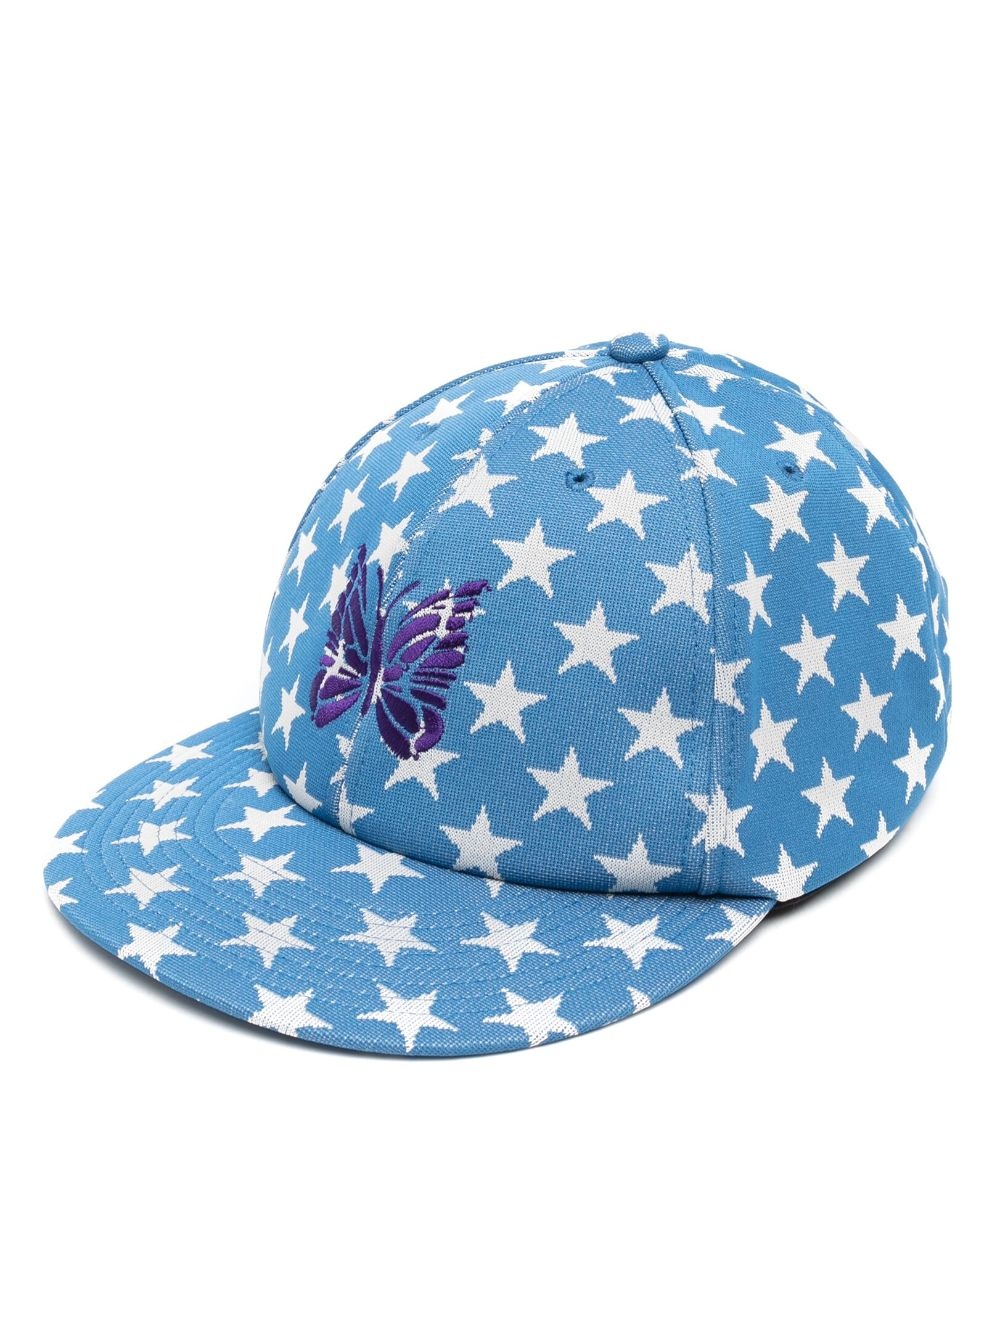 star-print hat - 1